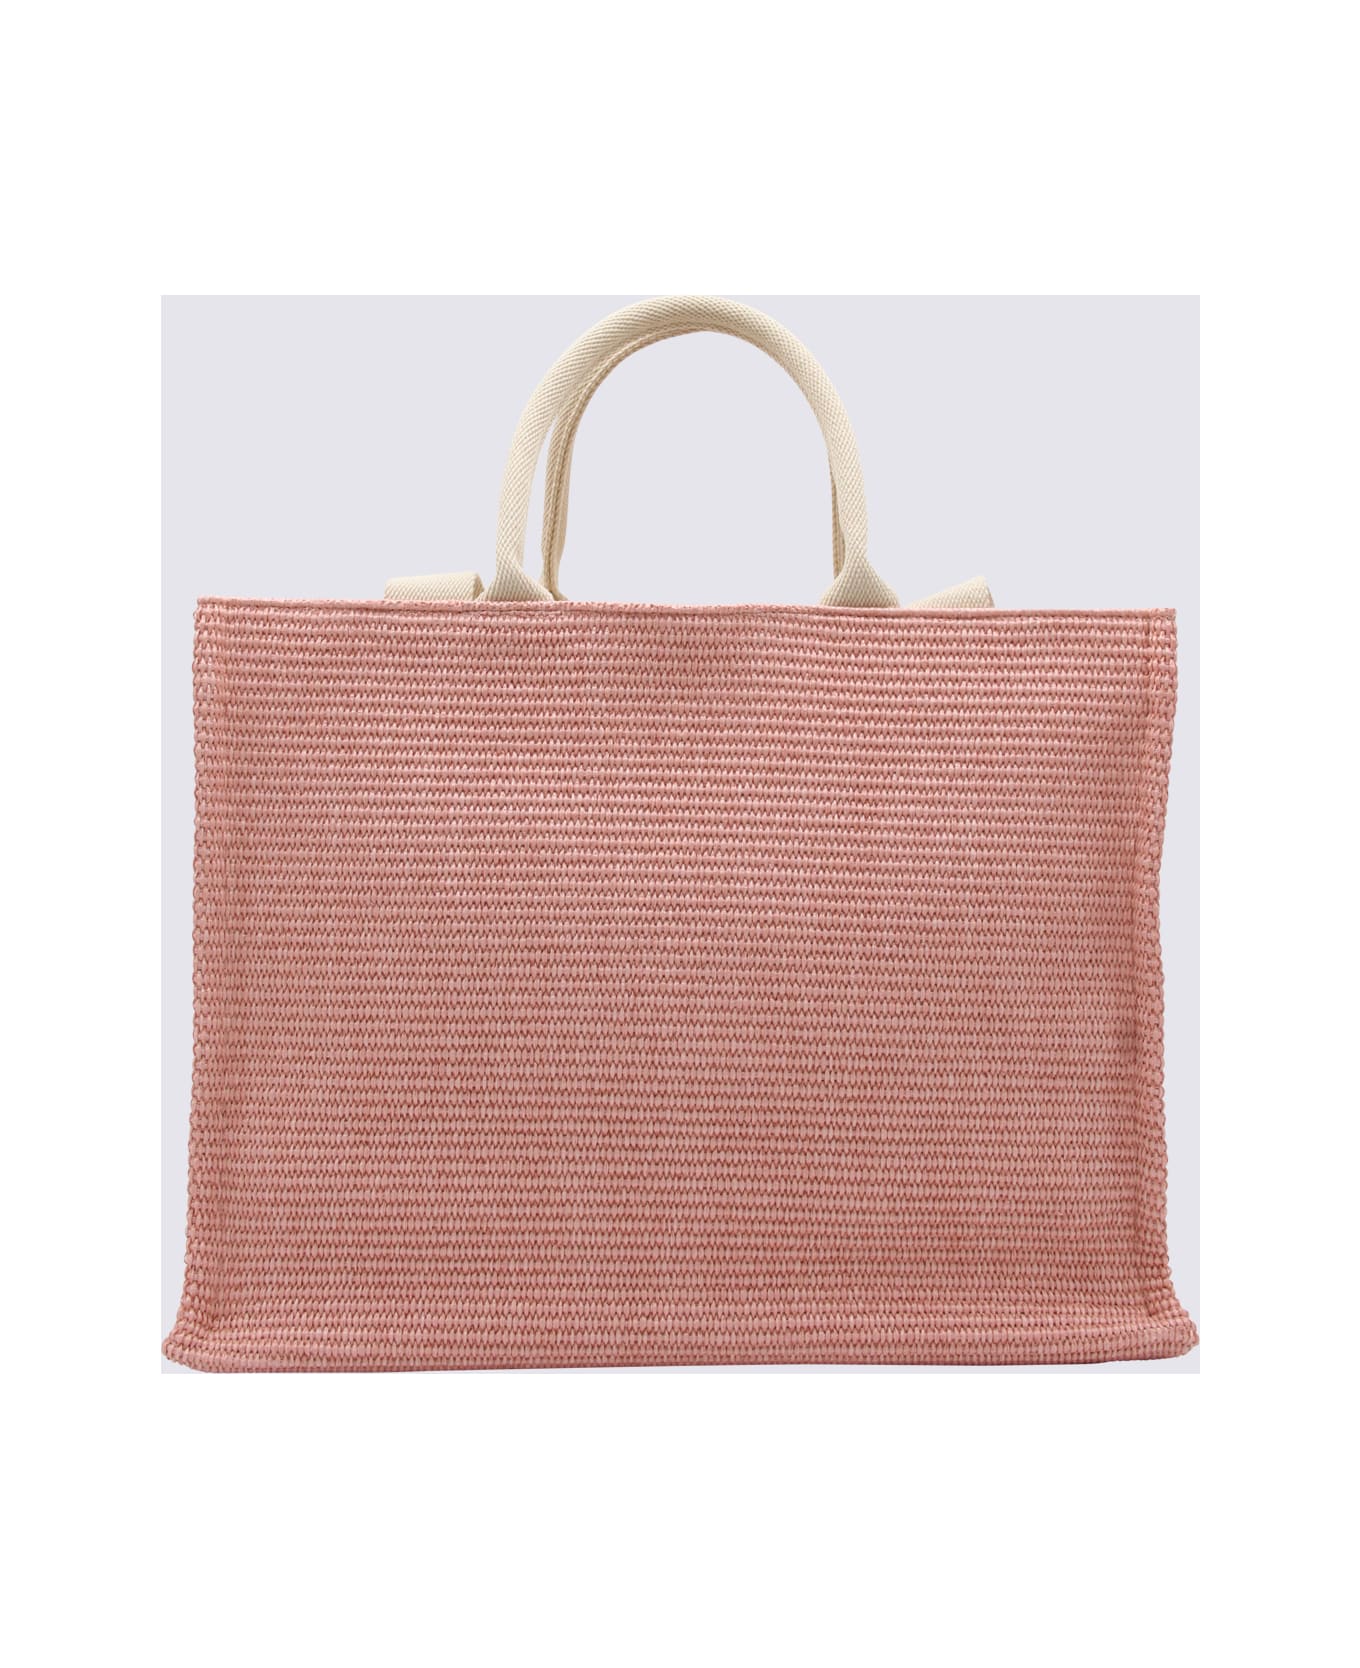 Marni Light Pink Canvas Basket Medium Tote Bag - LIGHT PINK